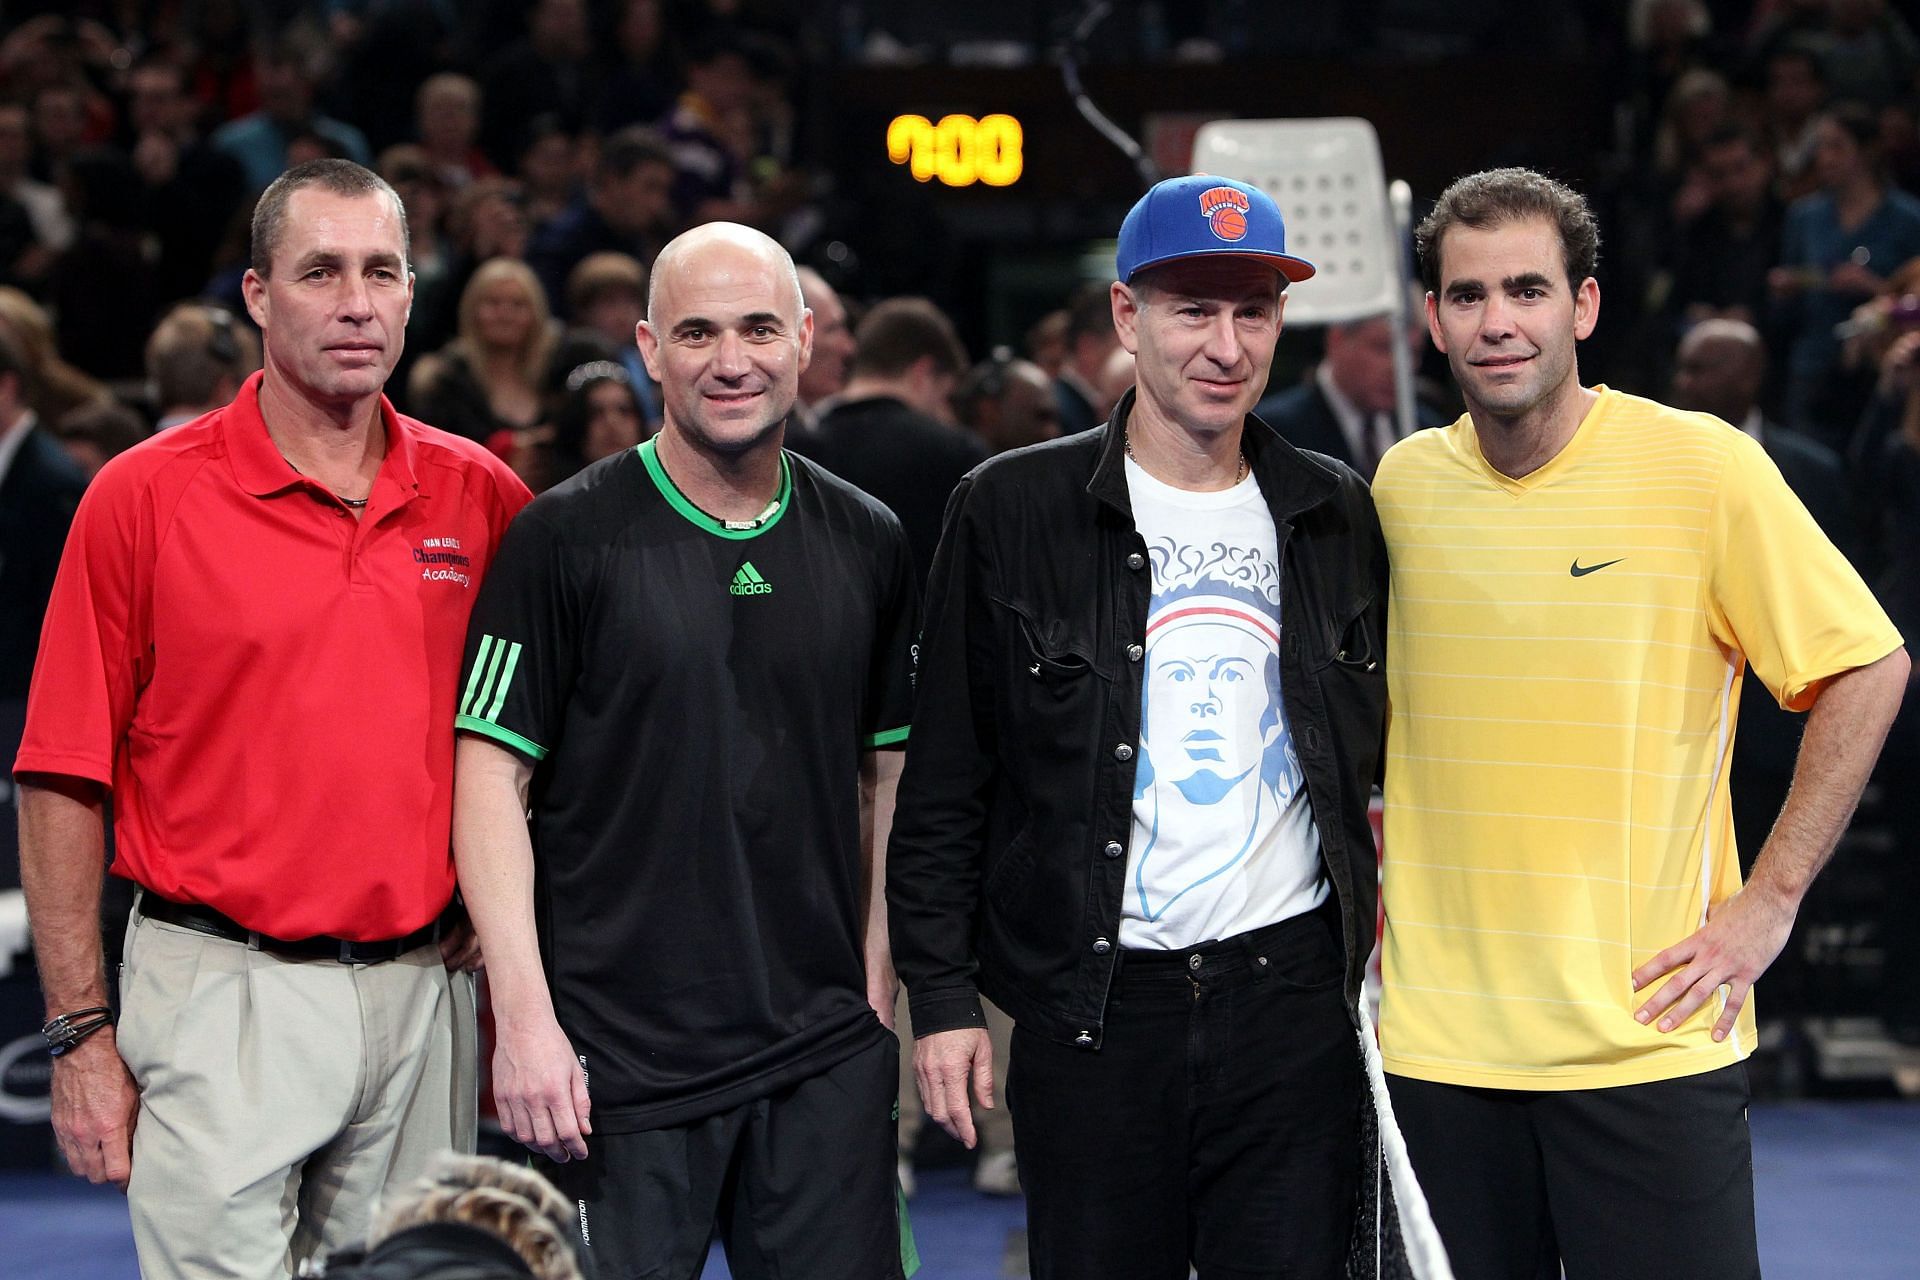 Ivan Lendl, Andre Agassi, John McEnroe and Pete Sampras at Madison Square Garden in 2011